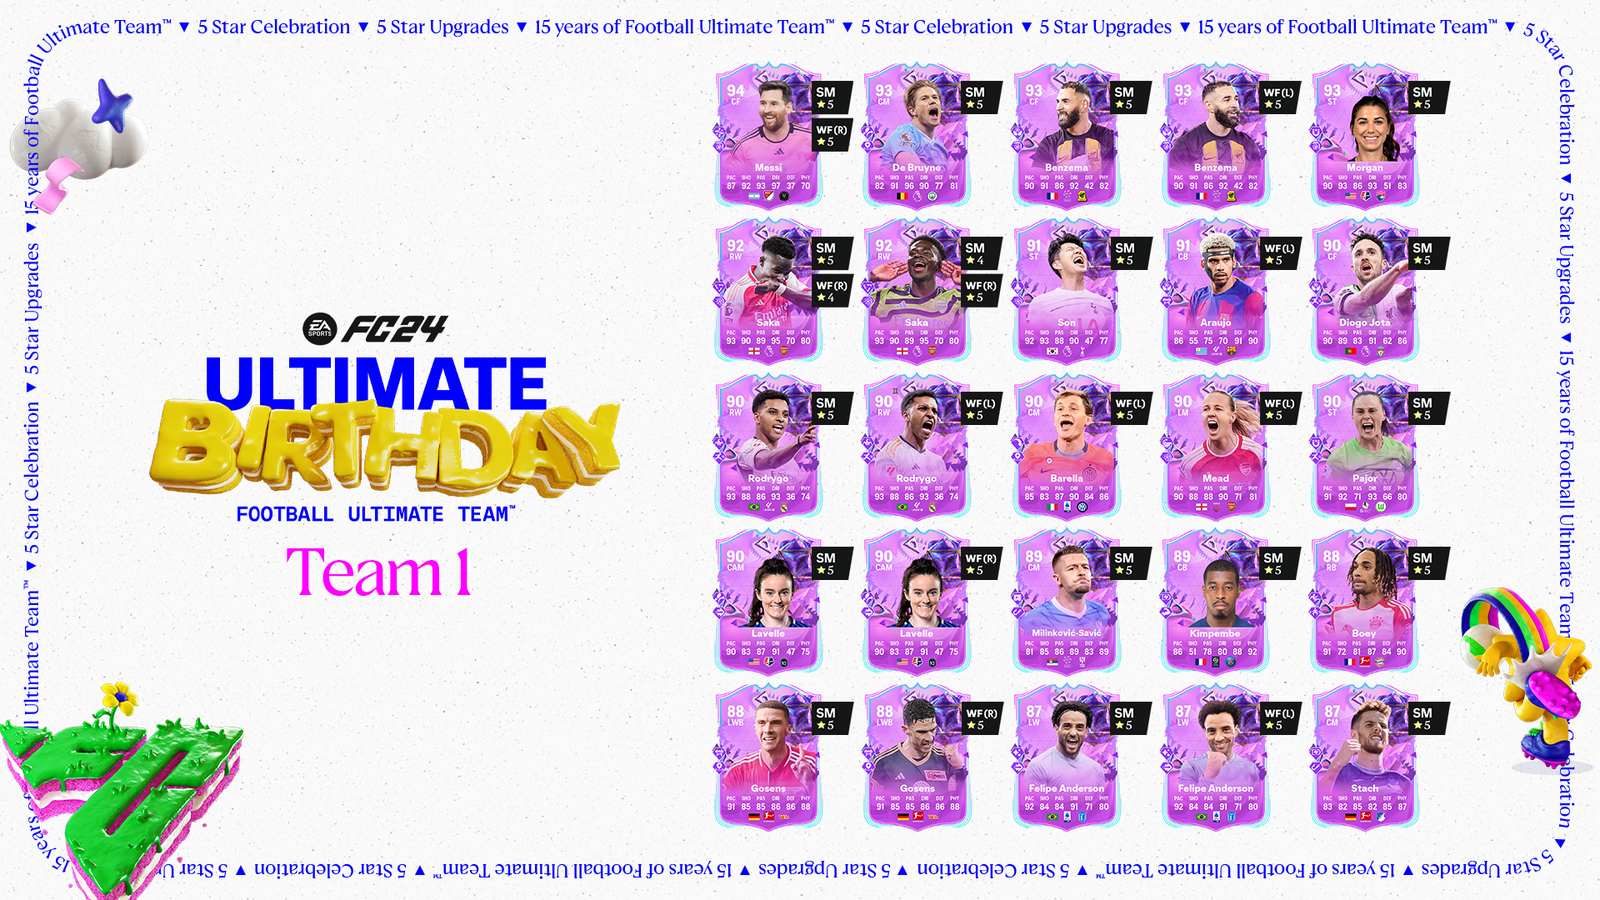 FC 24: Ultimate Birthday Team 2